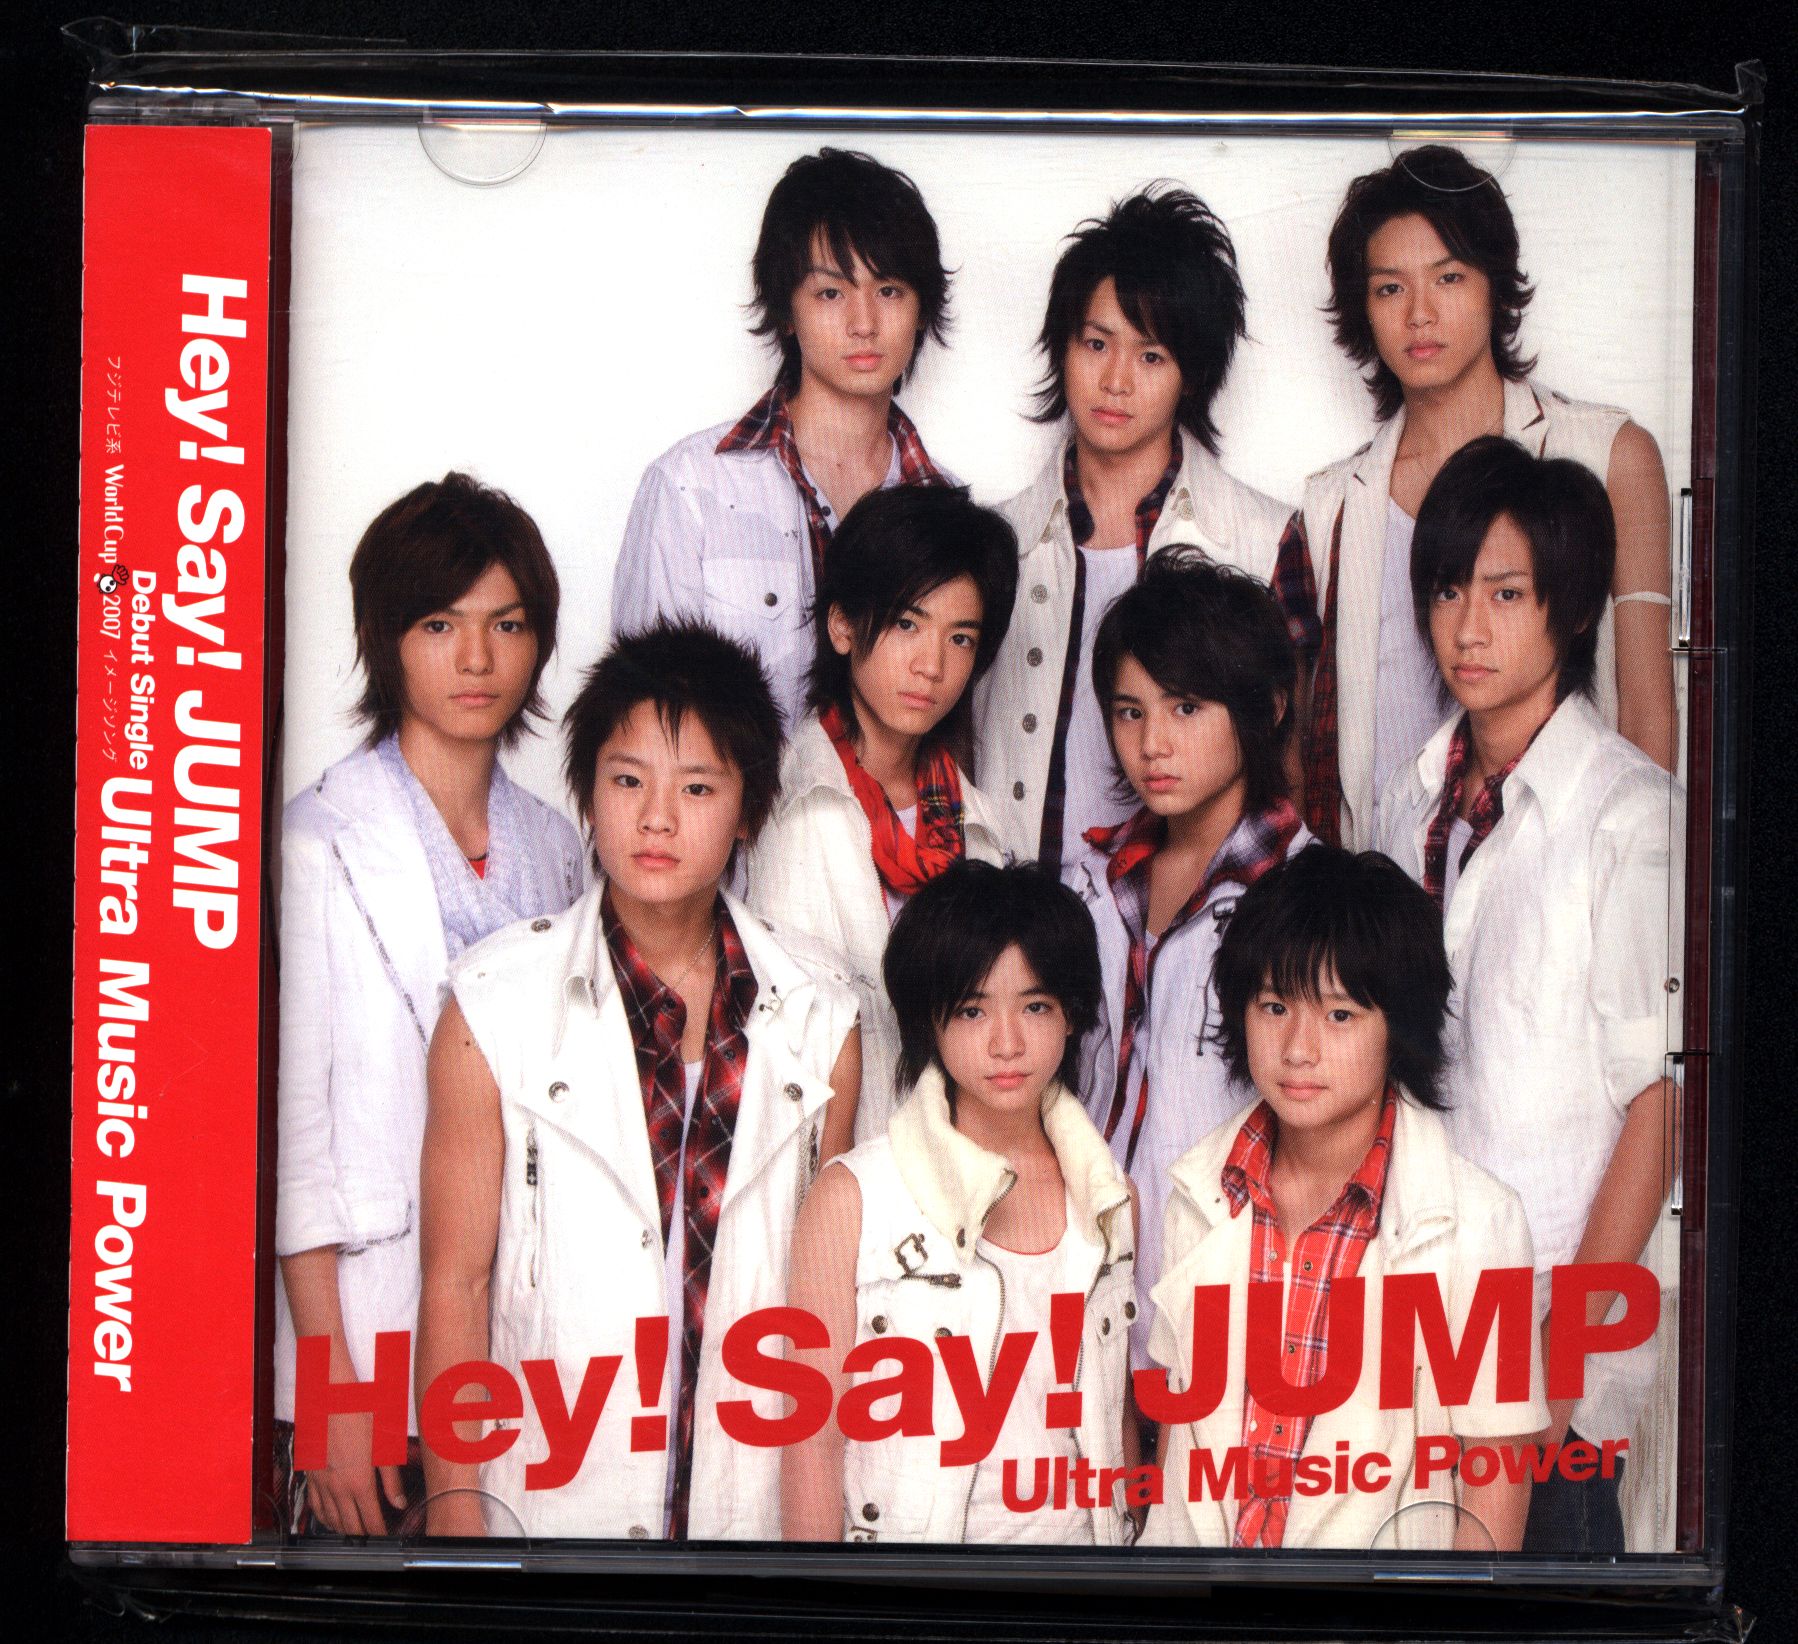 Hey! Say! JUMP Ultra Music Power CD サイン付 - 男性アイドル